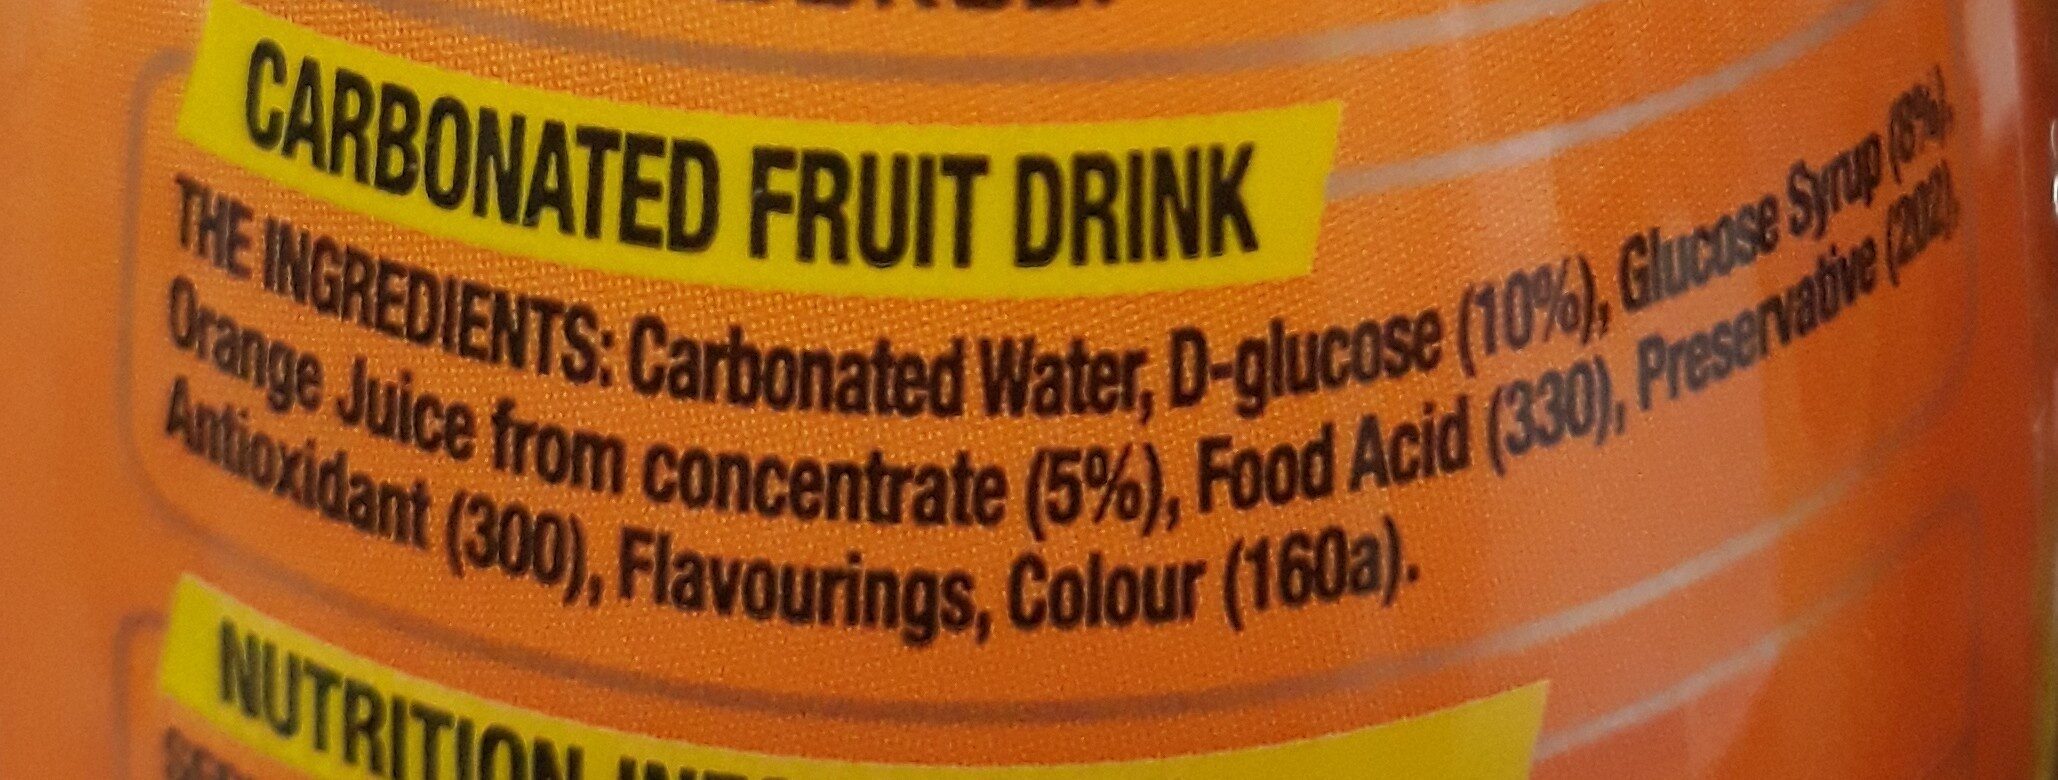 lucozade orange - Ingredients